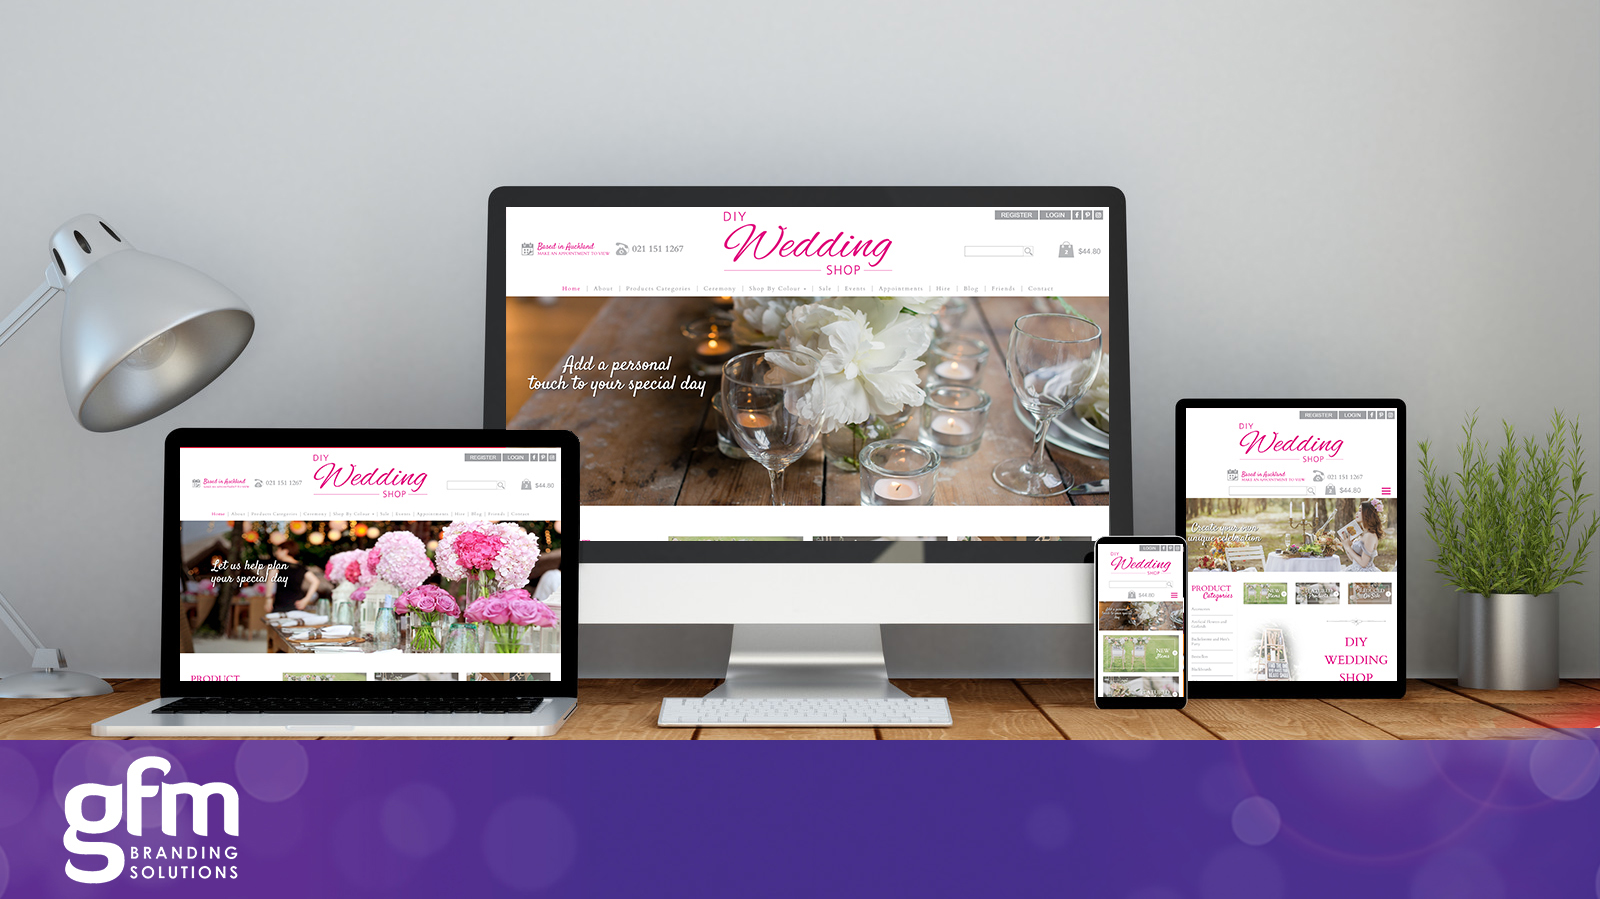 DIY Wedding Shop fully responsive website design on multiple screens